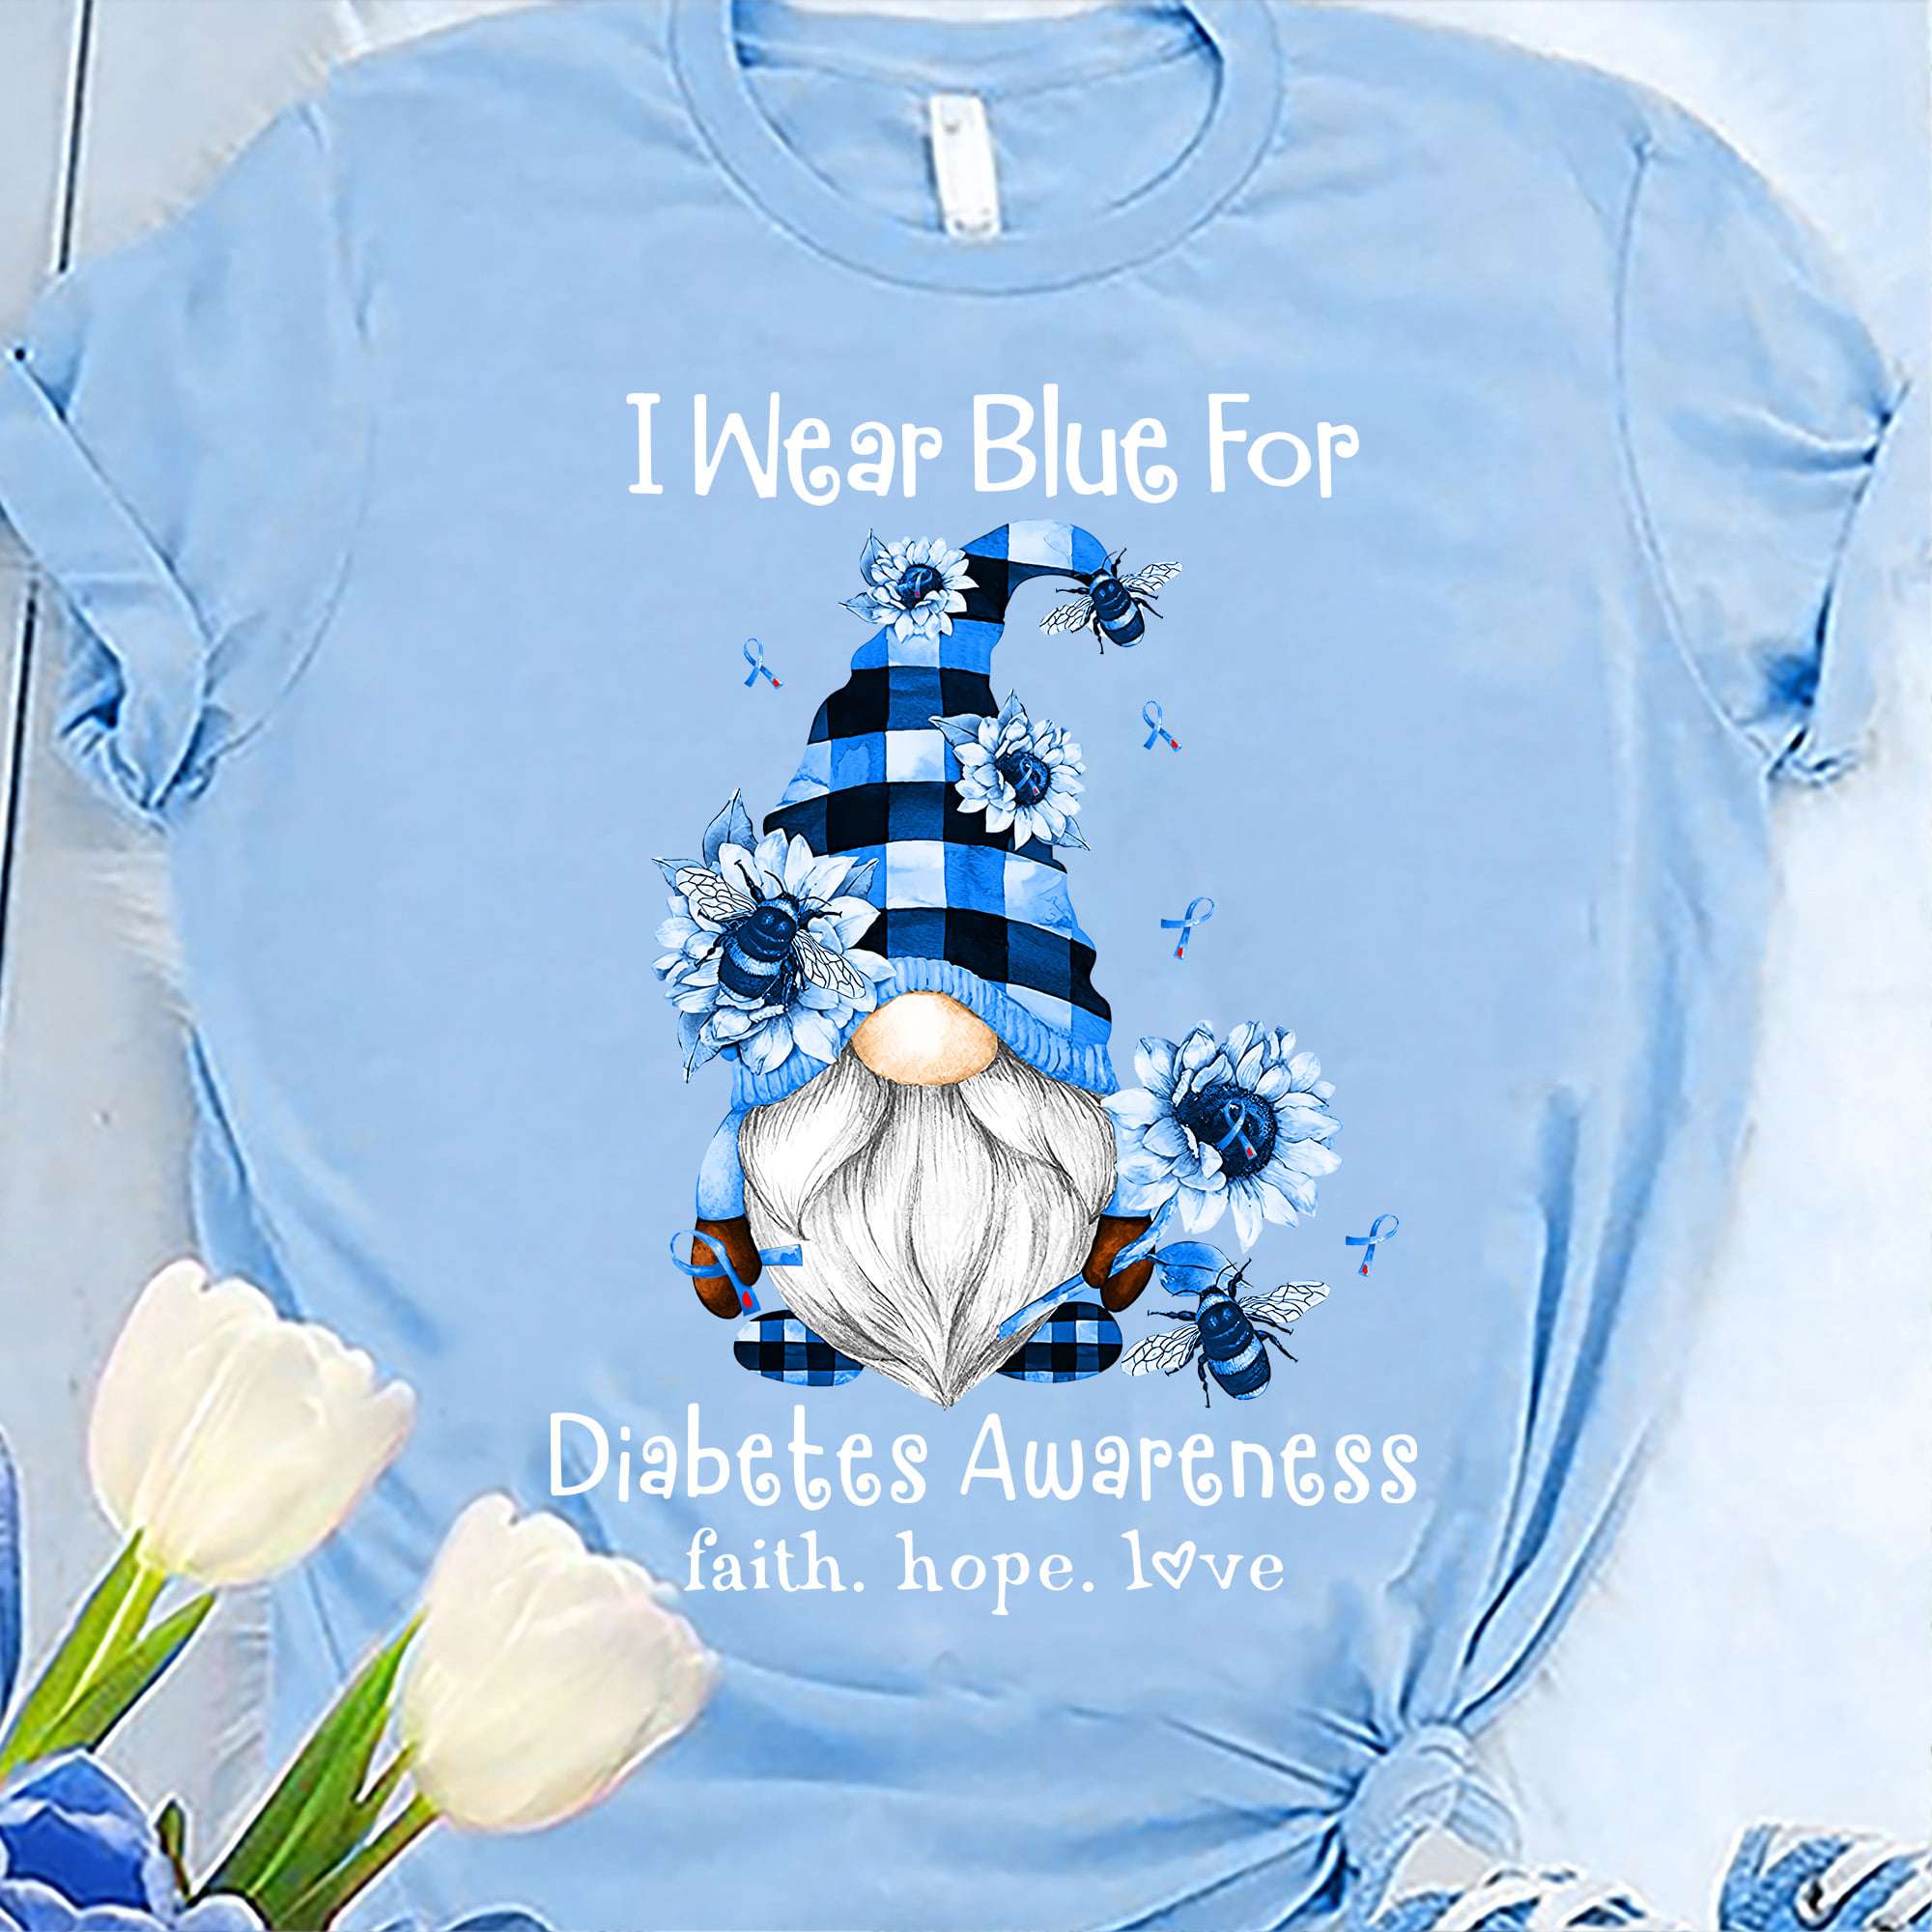 Diabetes Gnomes - I wear blue for diabetes awareness faith hope love